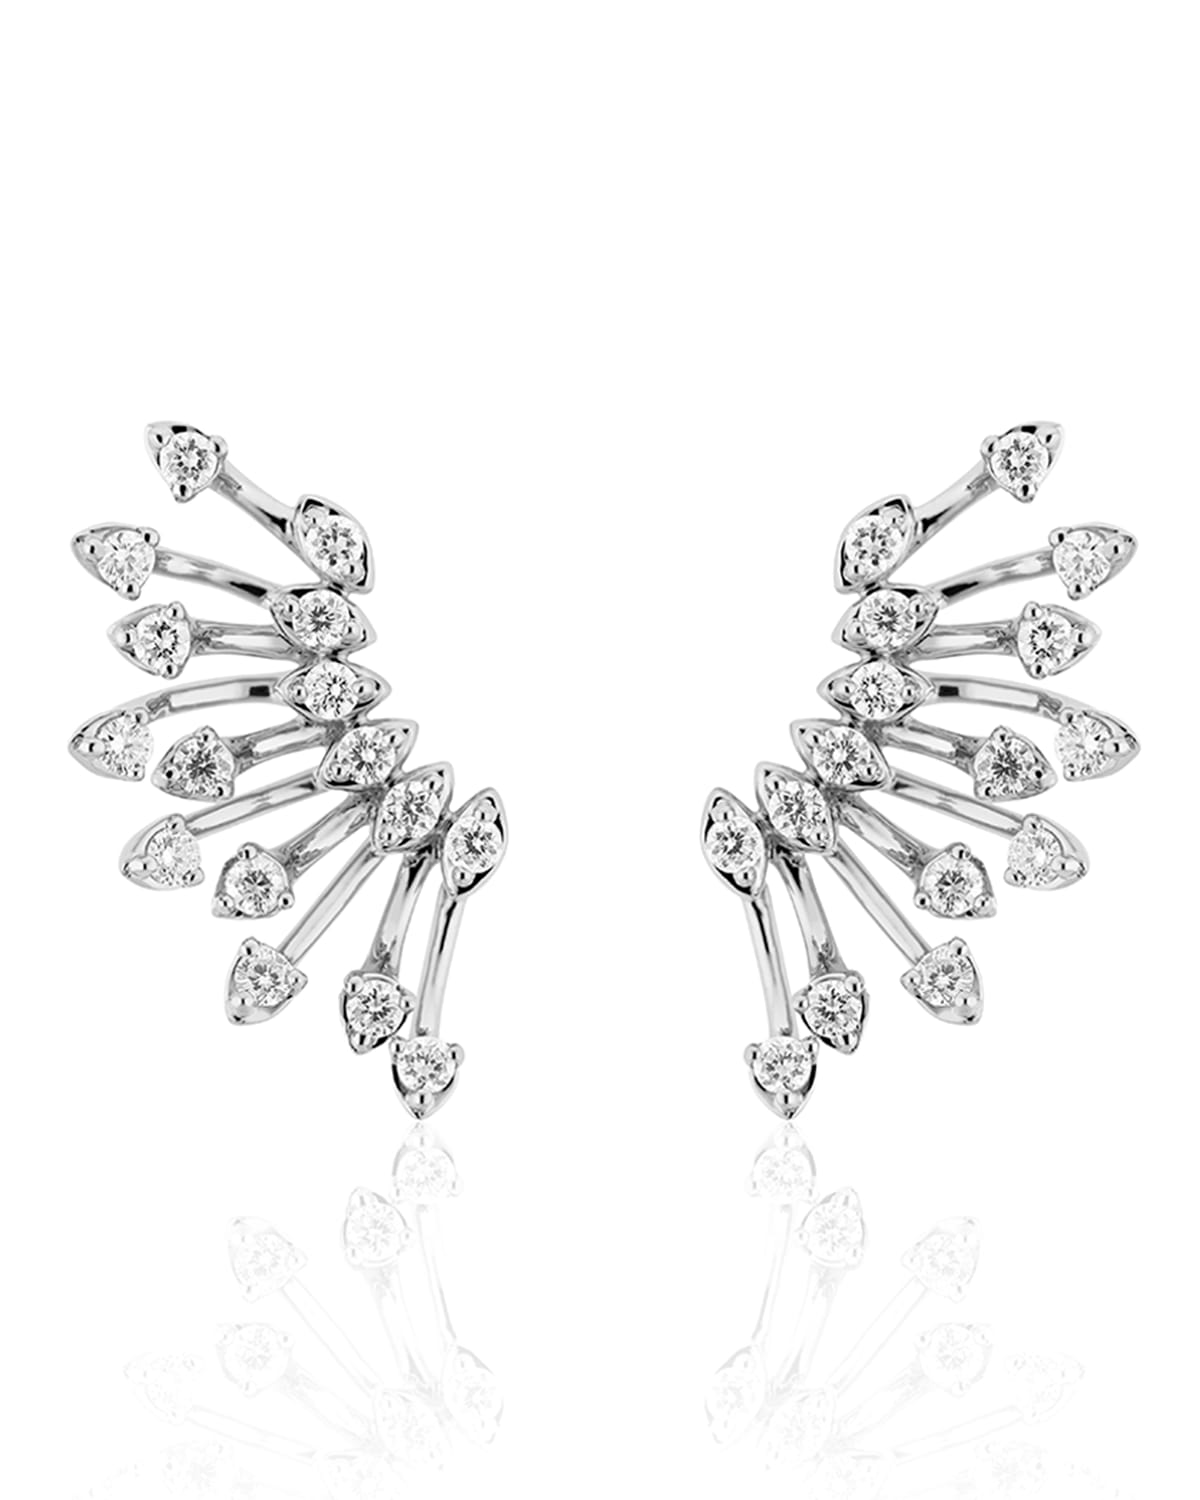 Bahia 18k White Gold Diamond Huggie Earrings